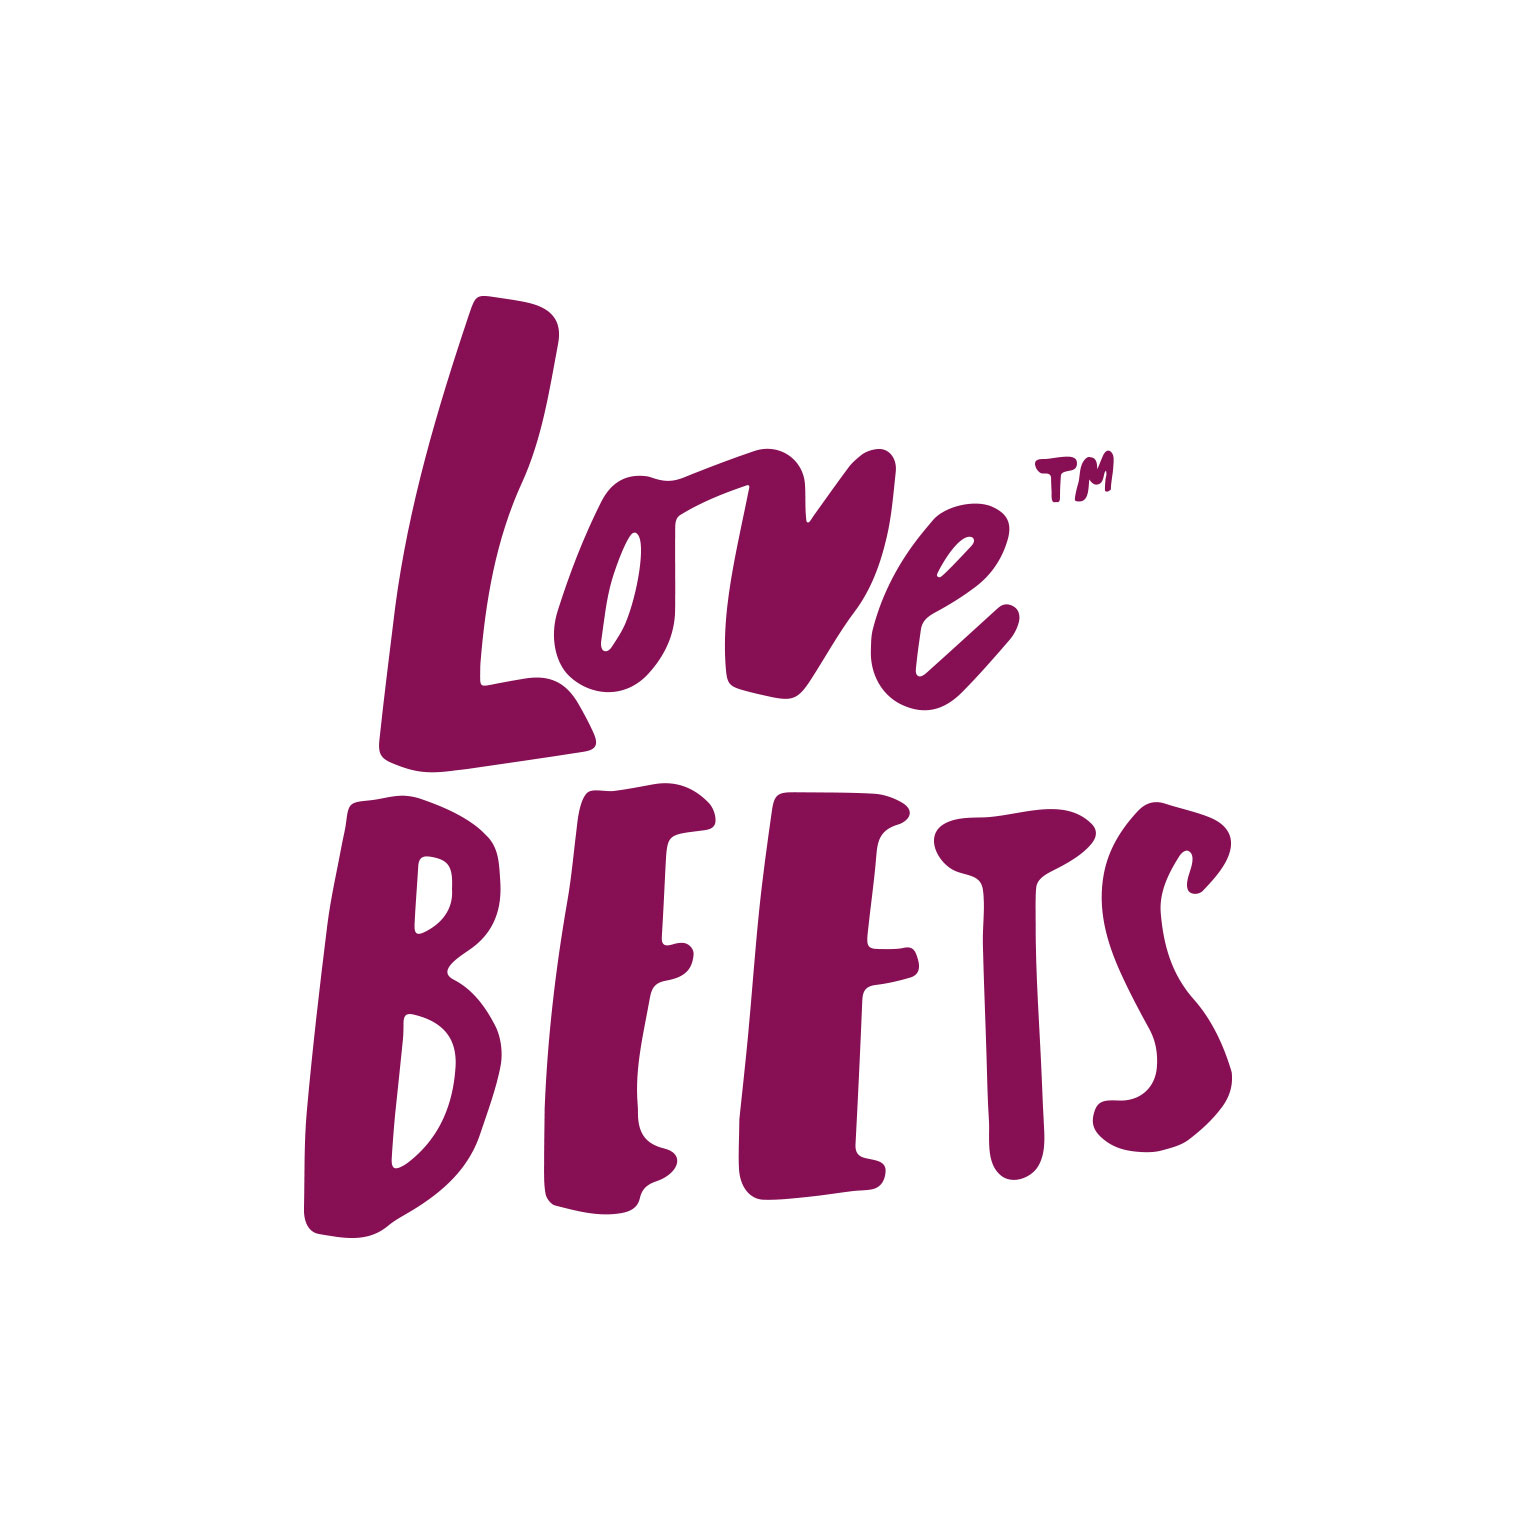 Love Beets